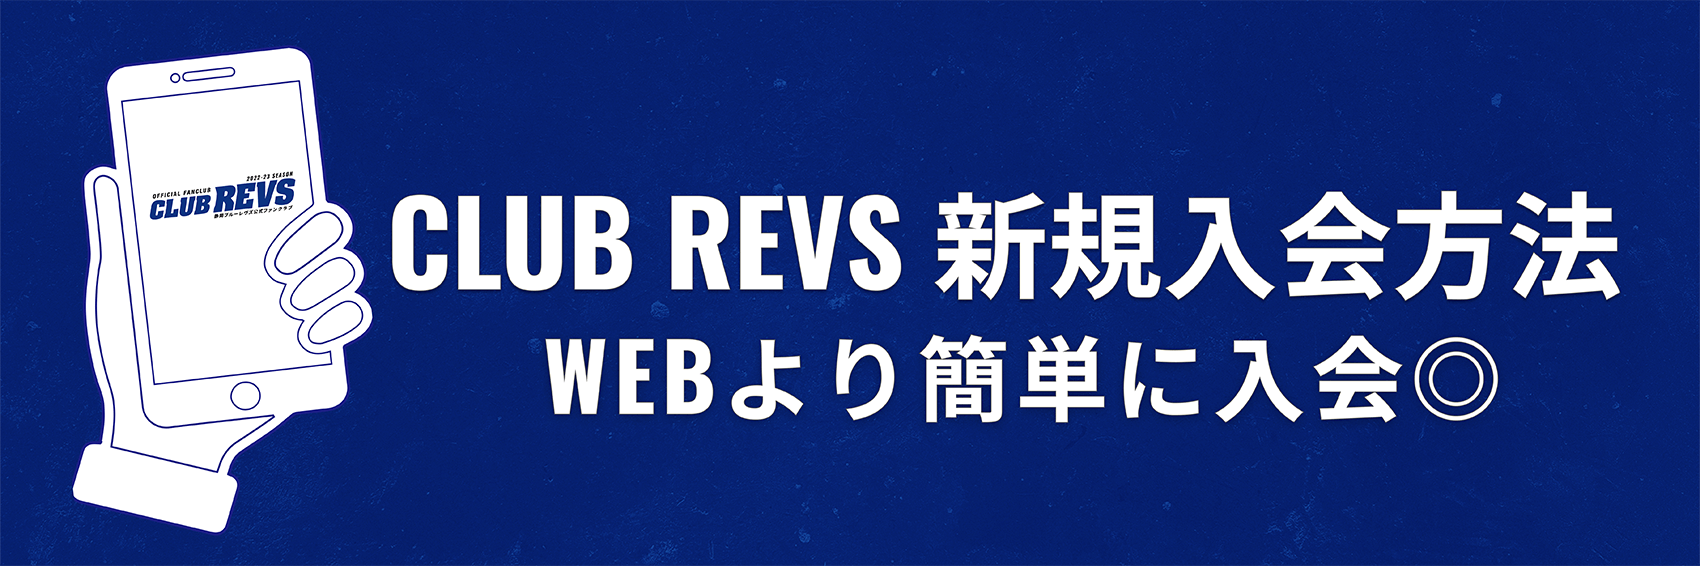 CLUB REVS 新規入会方法 WEBより簡単に入会◎